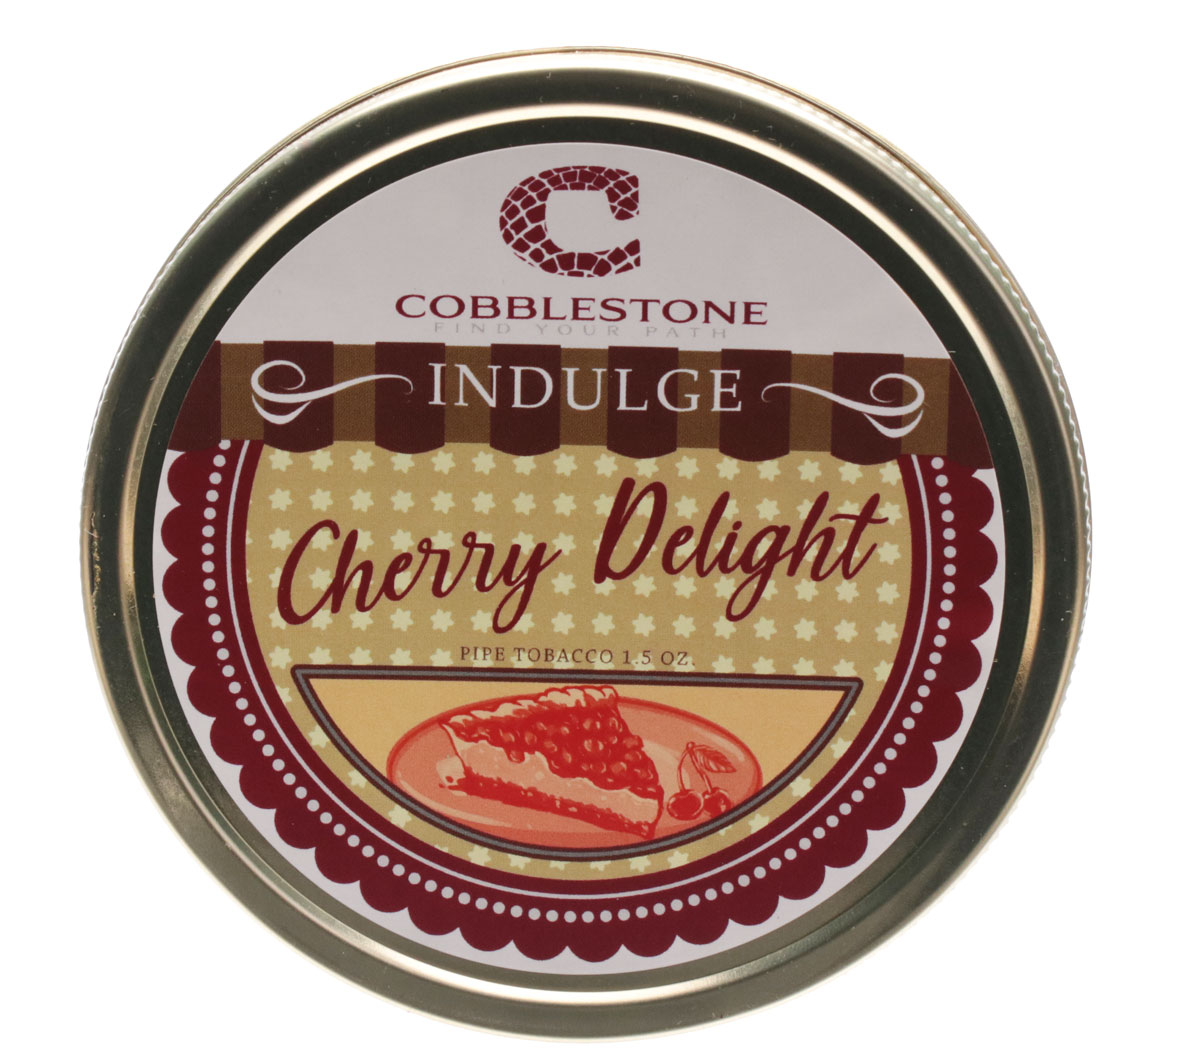 Cobblestone Indulge Cherry Delight 1.5oz